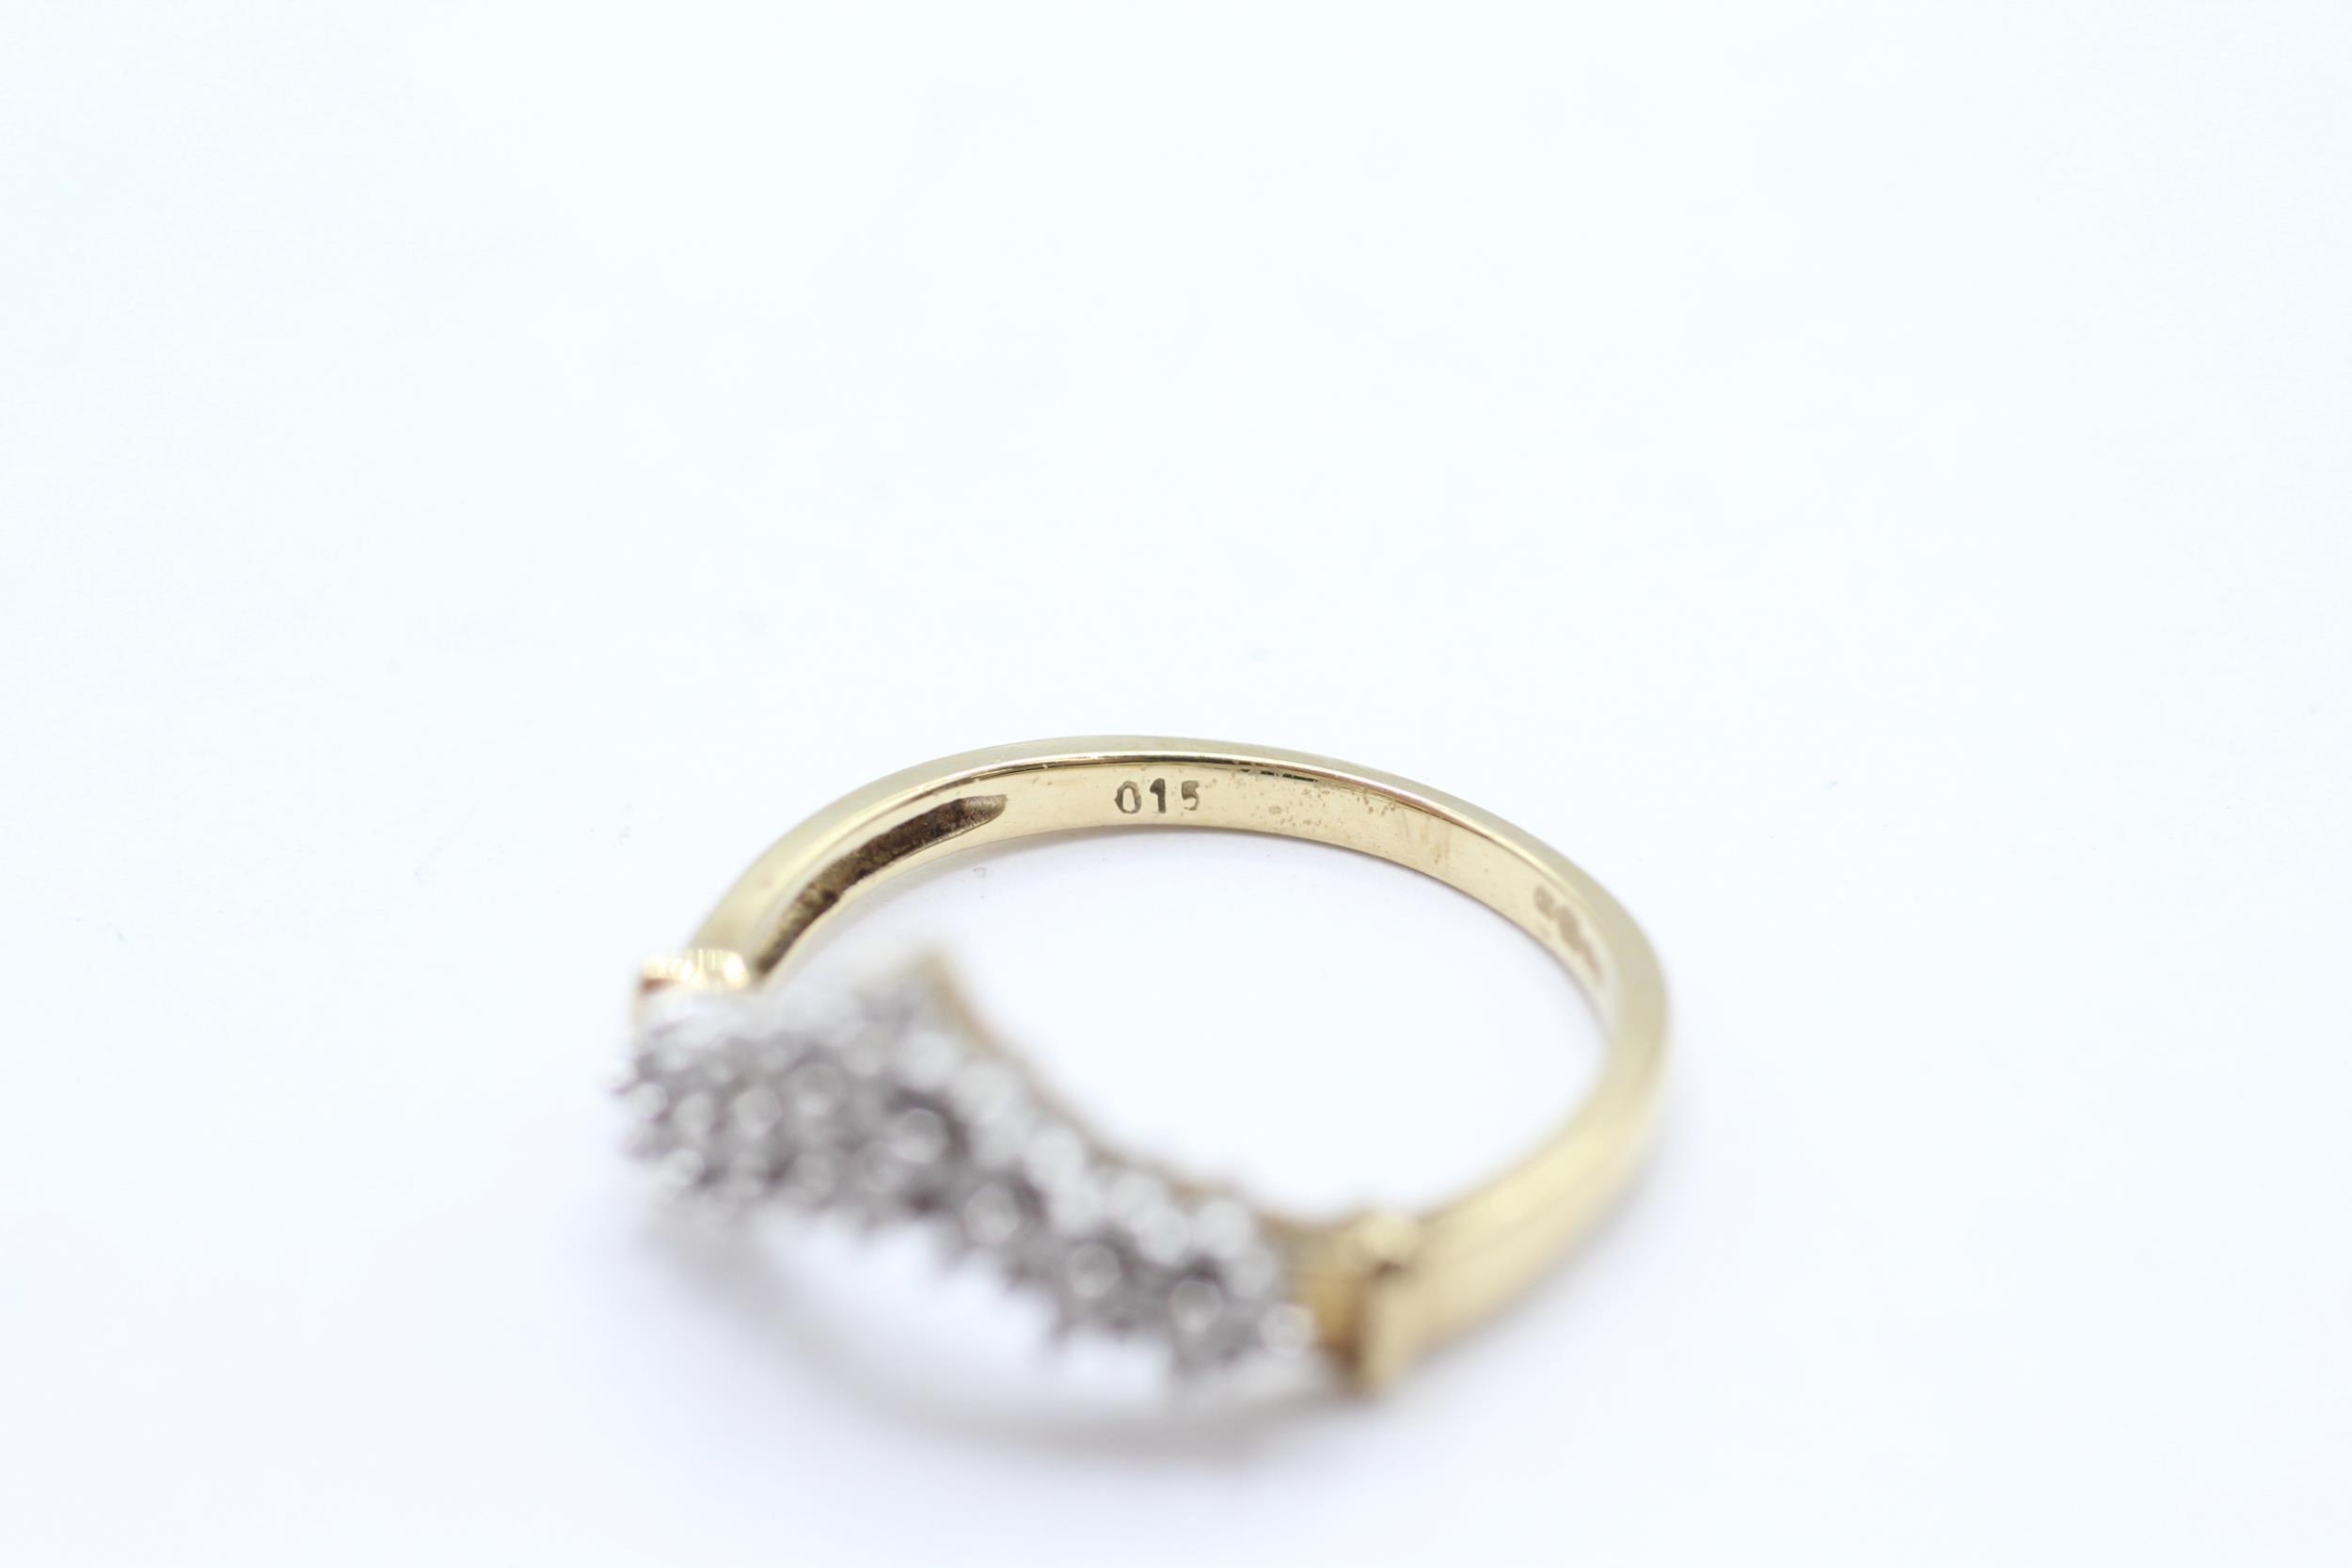 9ct gold pavé set diamond wishbone eternity ring Size M 1.8 g - Image 4 of 4